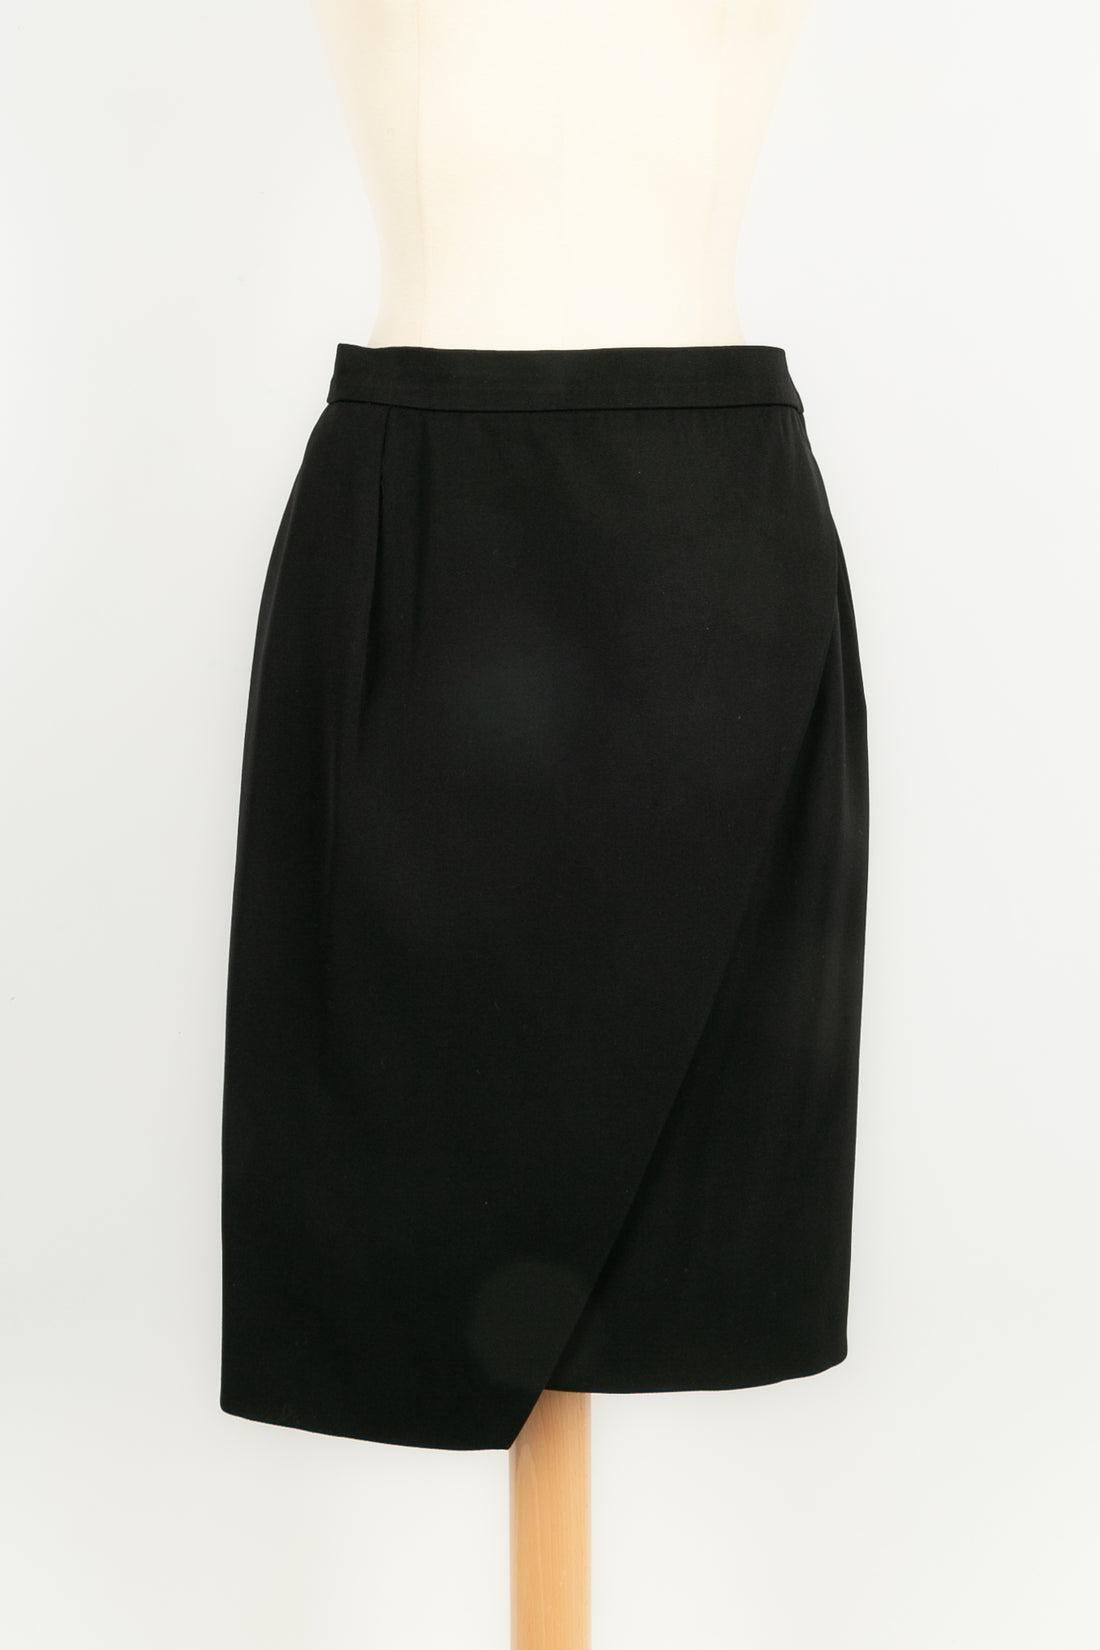 Yves Saint Laurent Black Skirt Suit For Sale 5